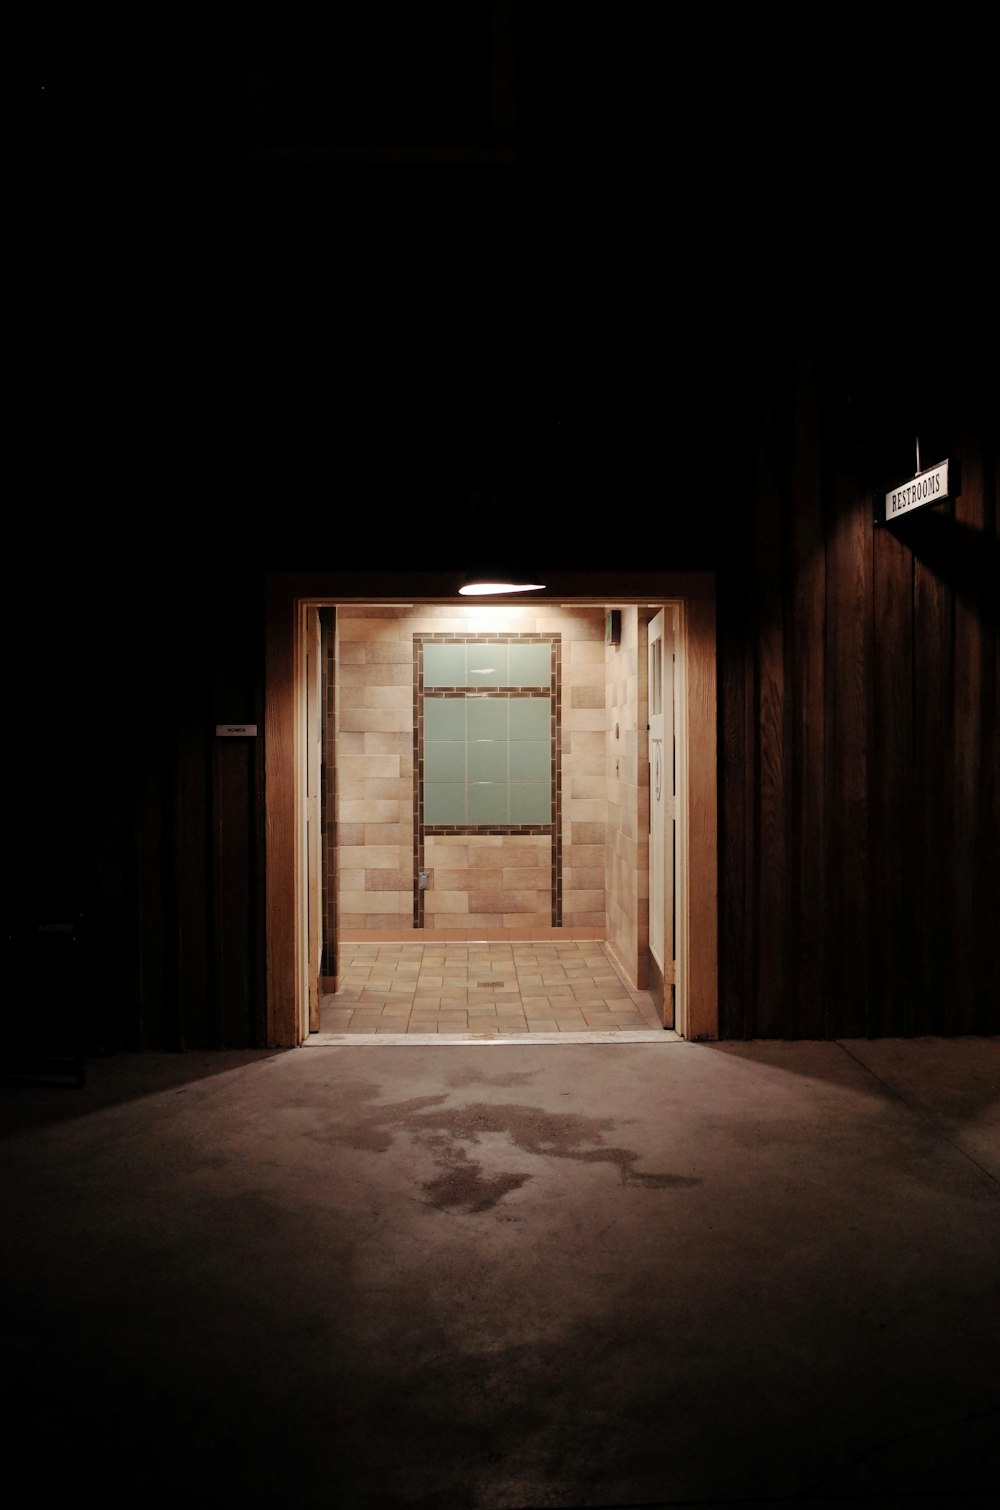 a dark room with an open door and a tiled floor